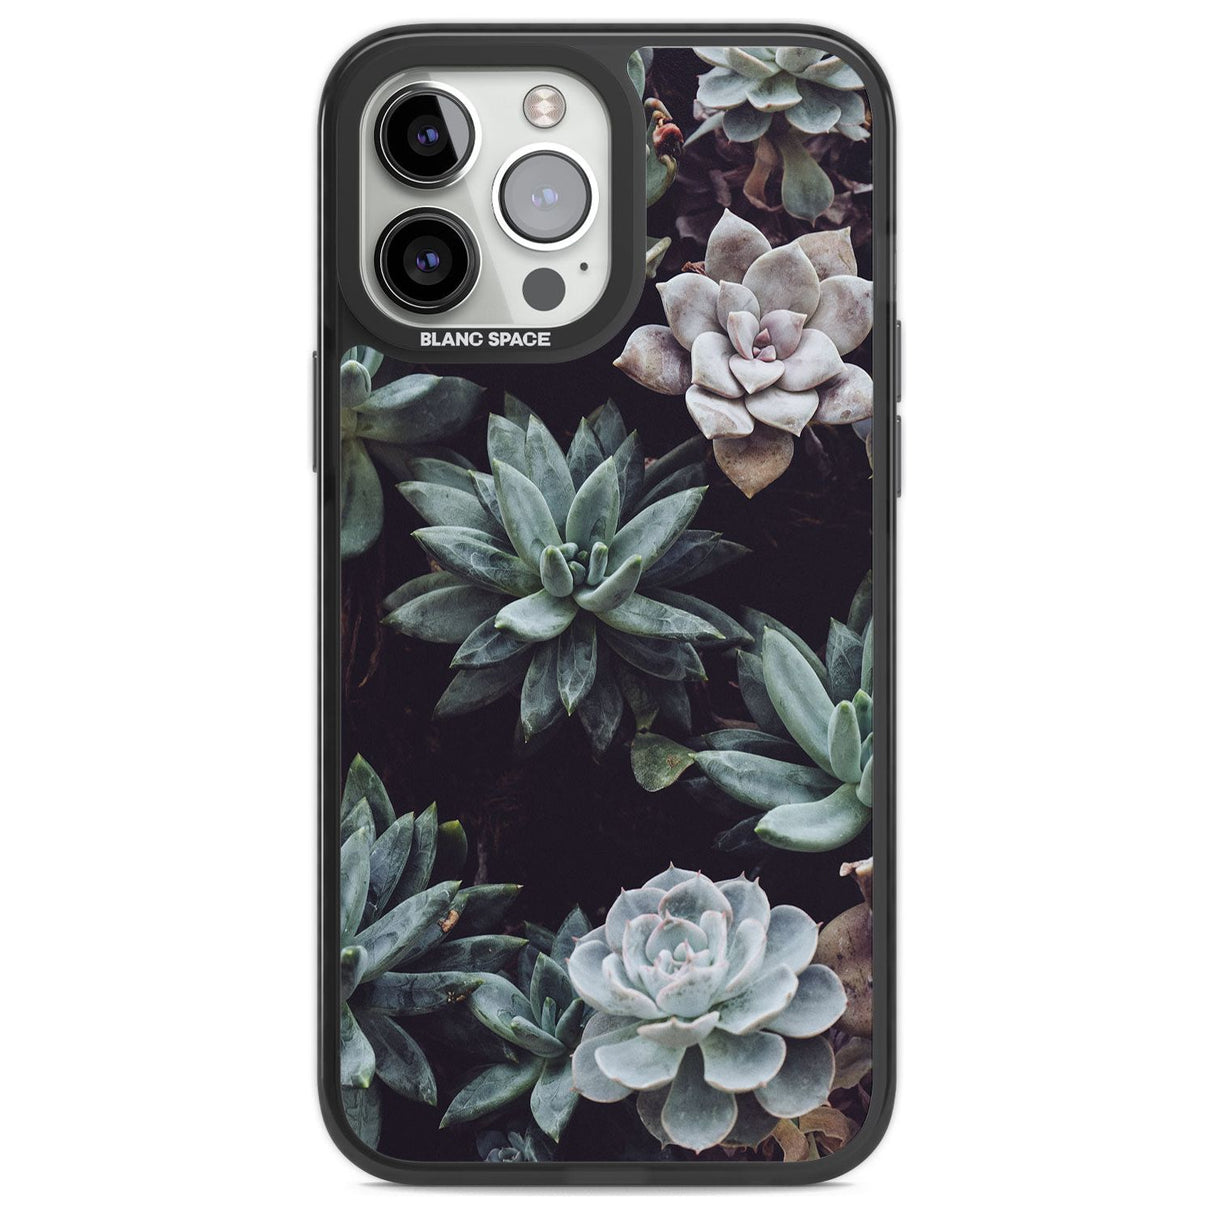 Mixed Succulents - Real Botanical Photographs Phone Case iPhone 13 Pro Max / Black Impact Case,iPhone 14 Pro Max / Black Impact Case Blanc Space